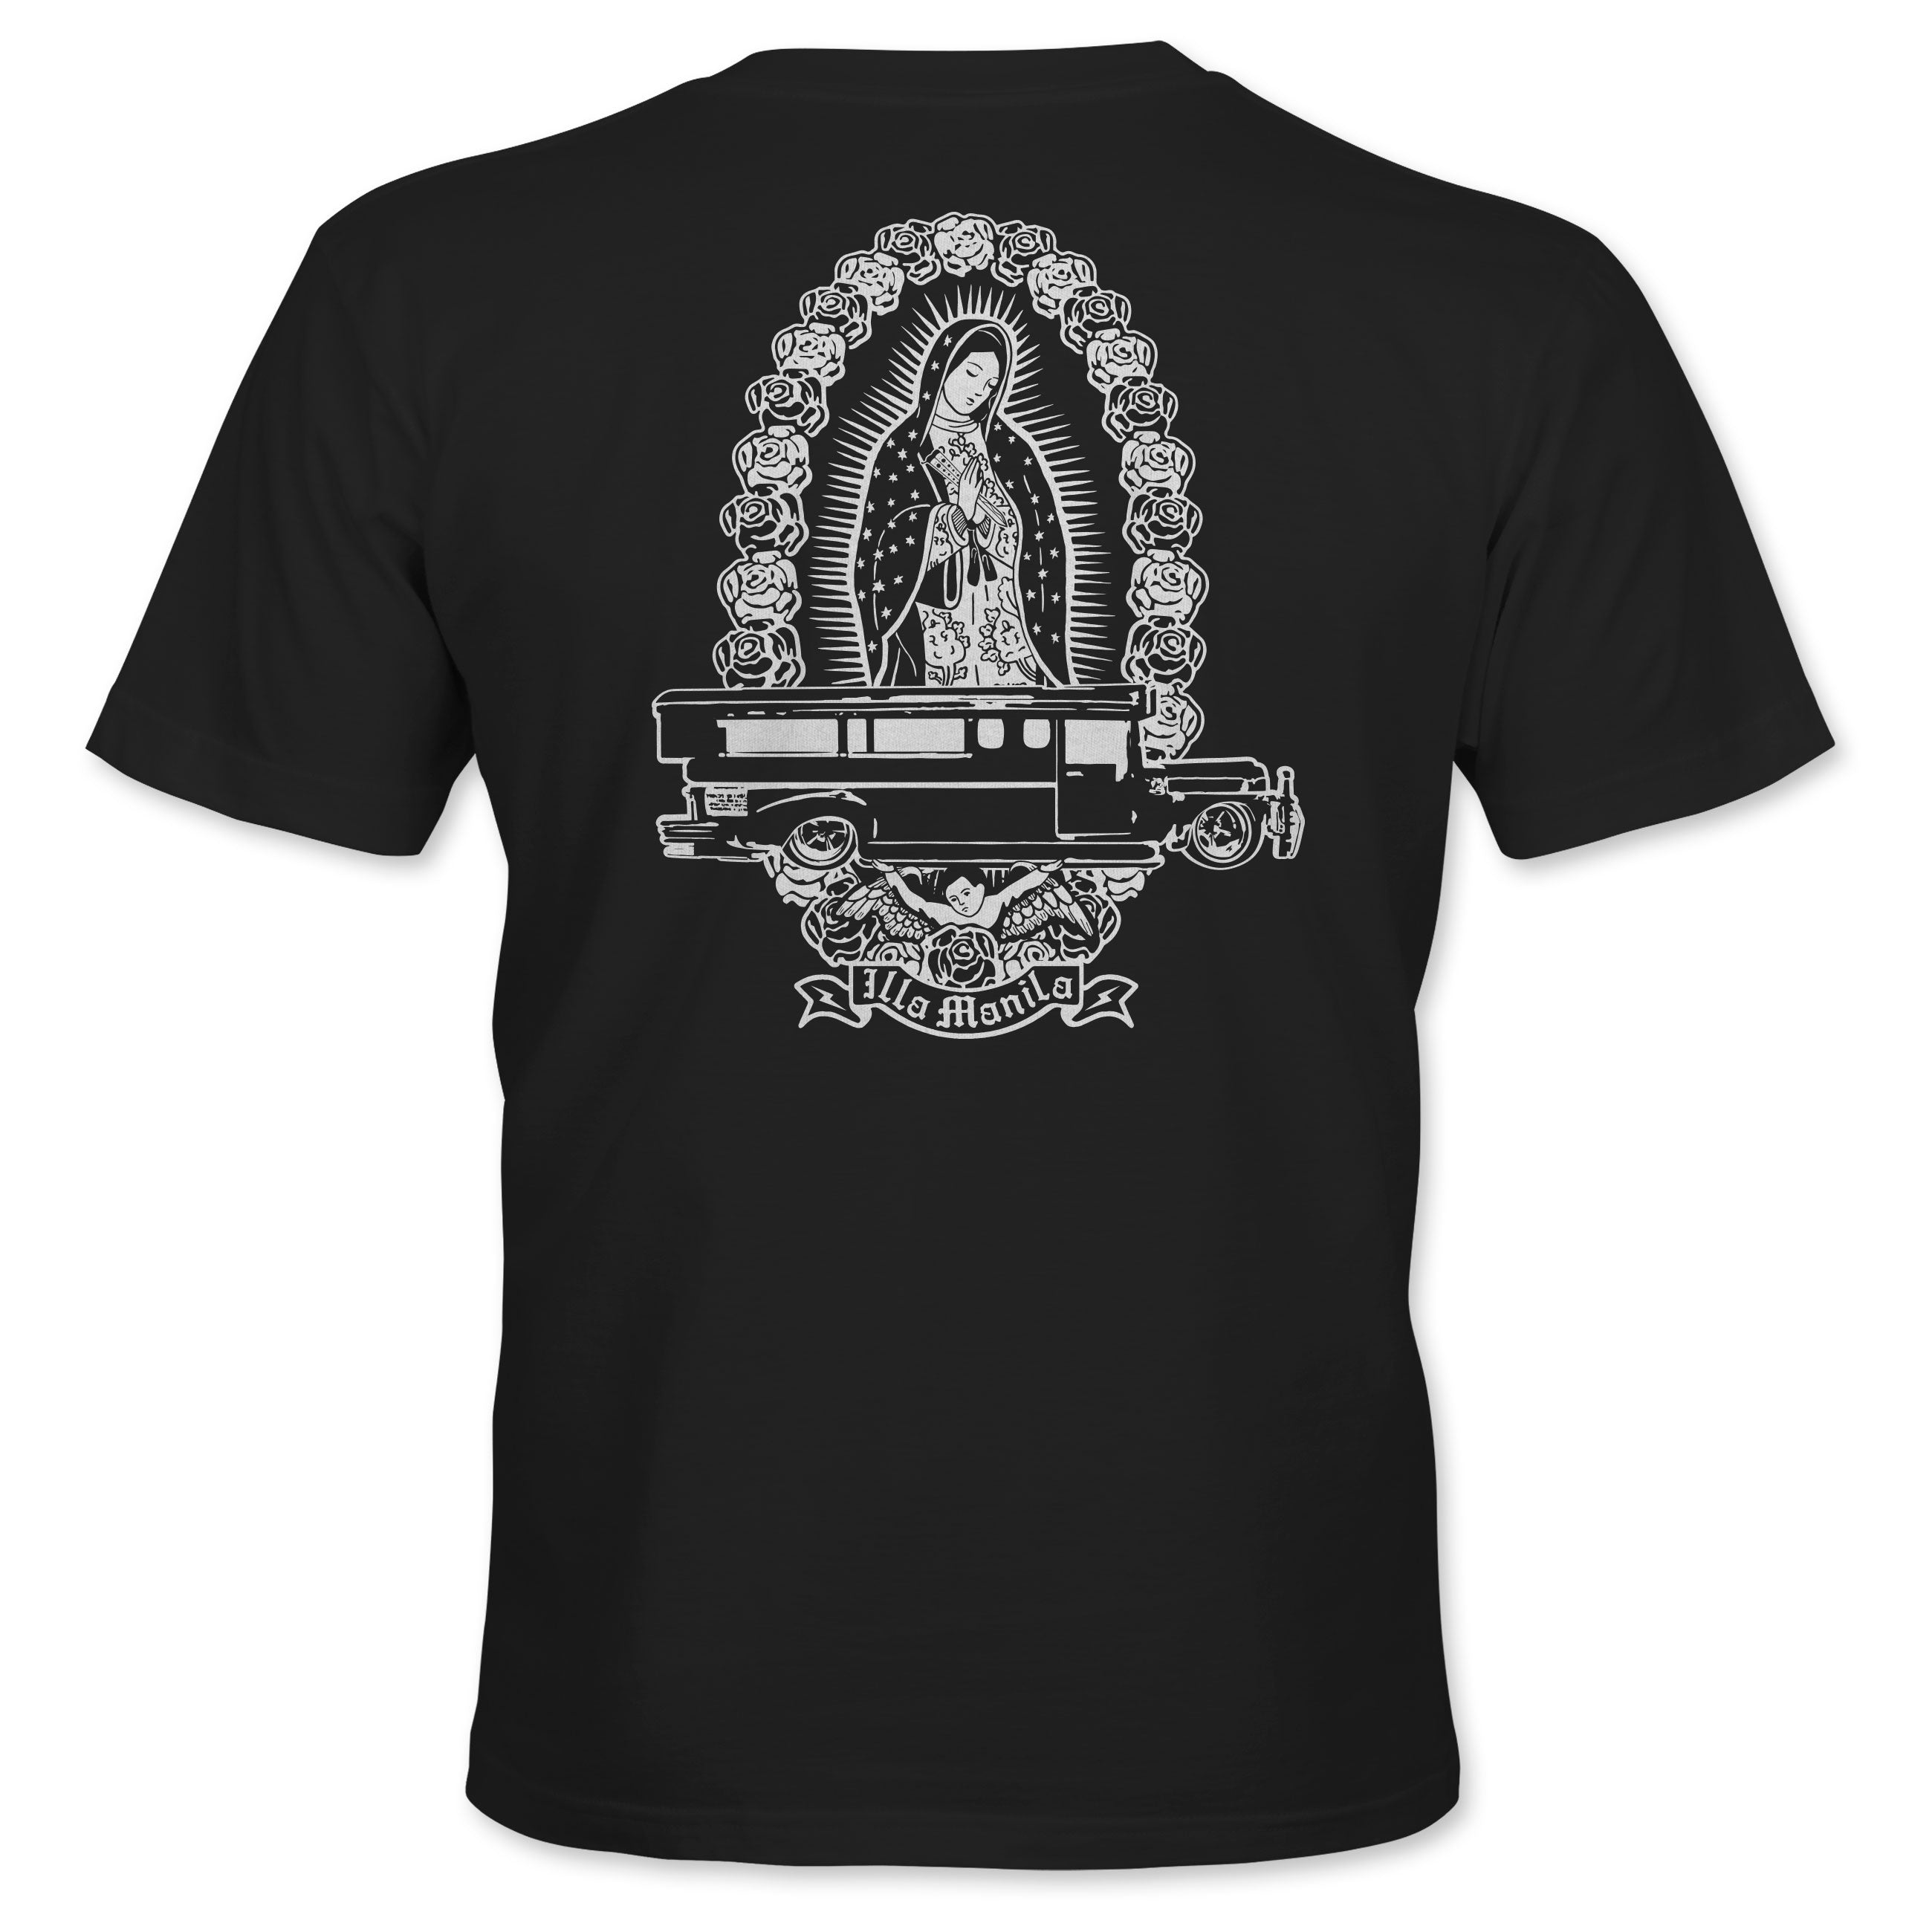 Our Lady T-shirt - Black